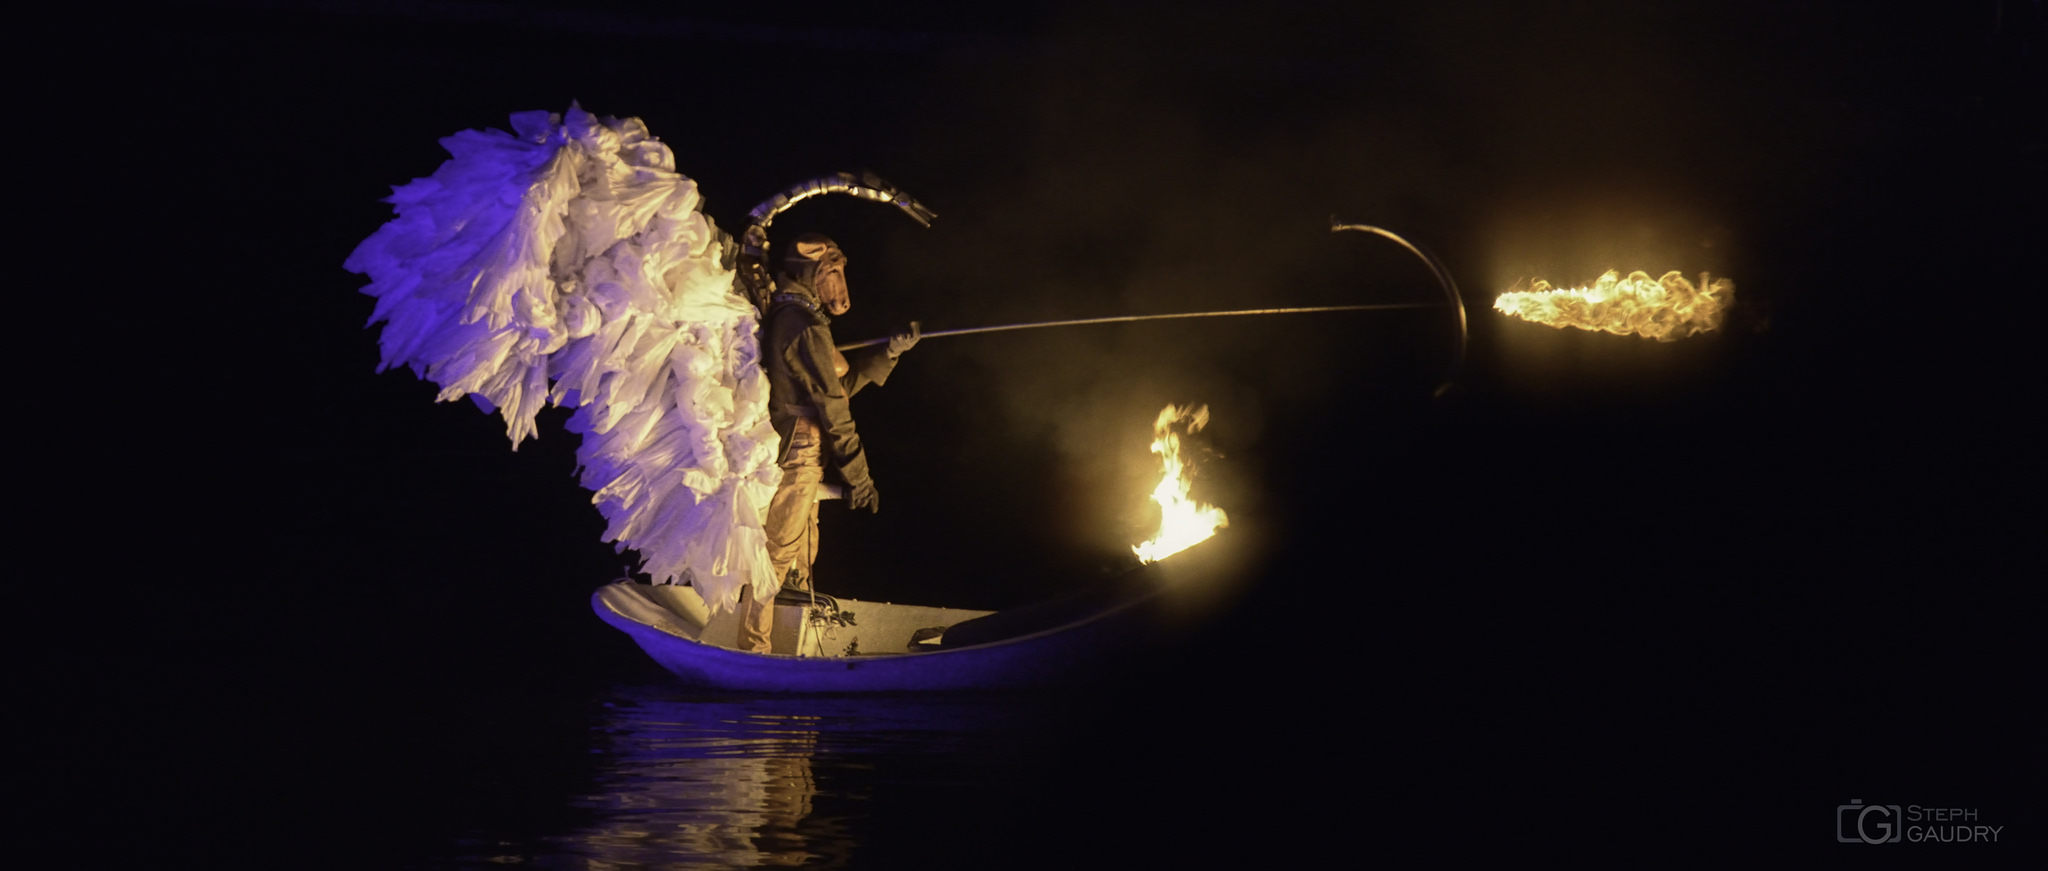 Un ange de feu  - Metamorphoses - Les fous du bassin [Click to start slideshow]